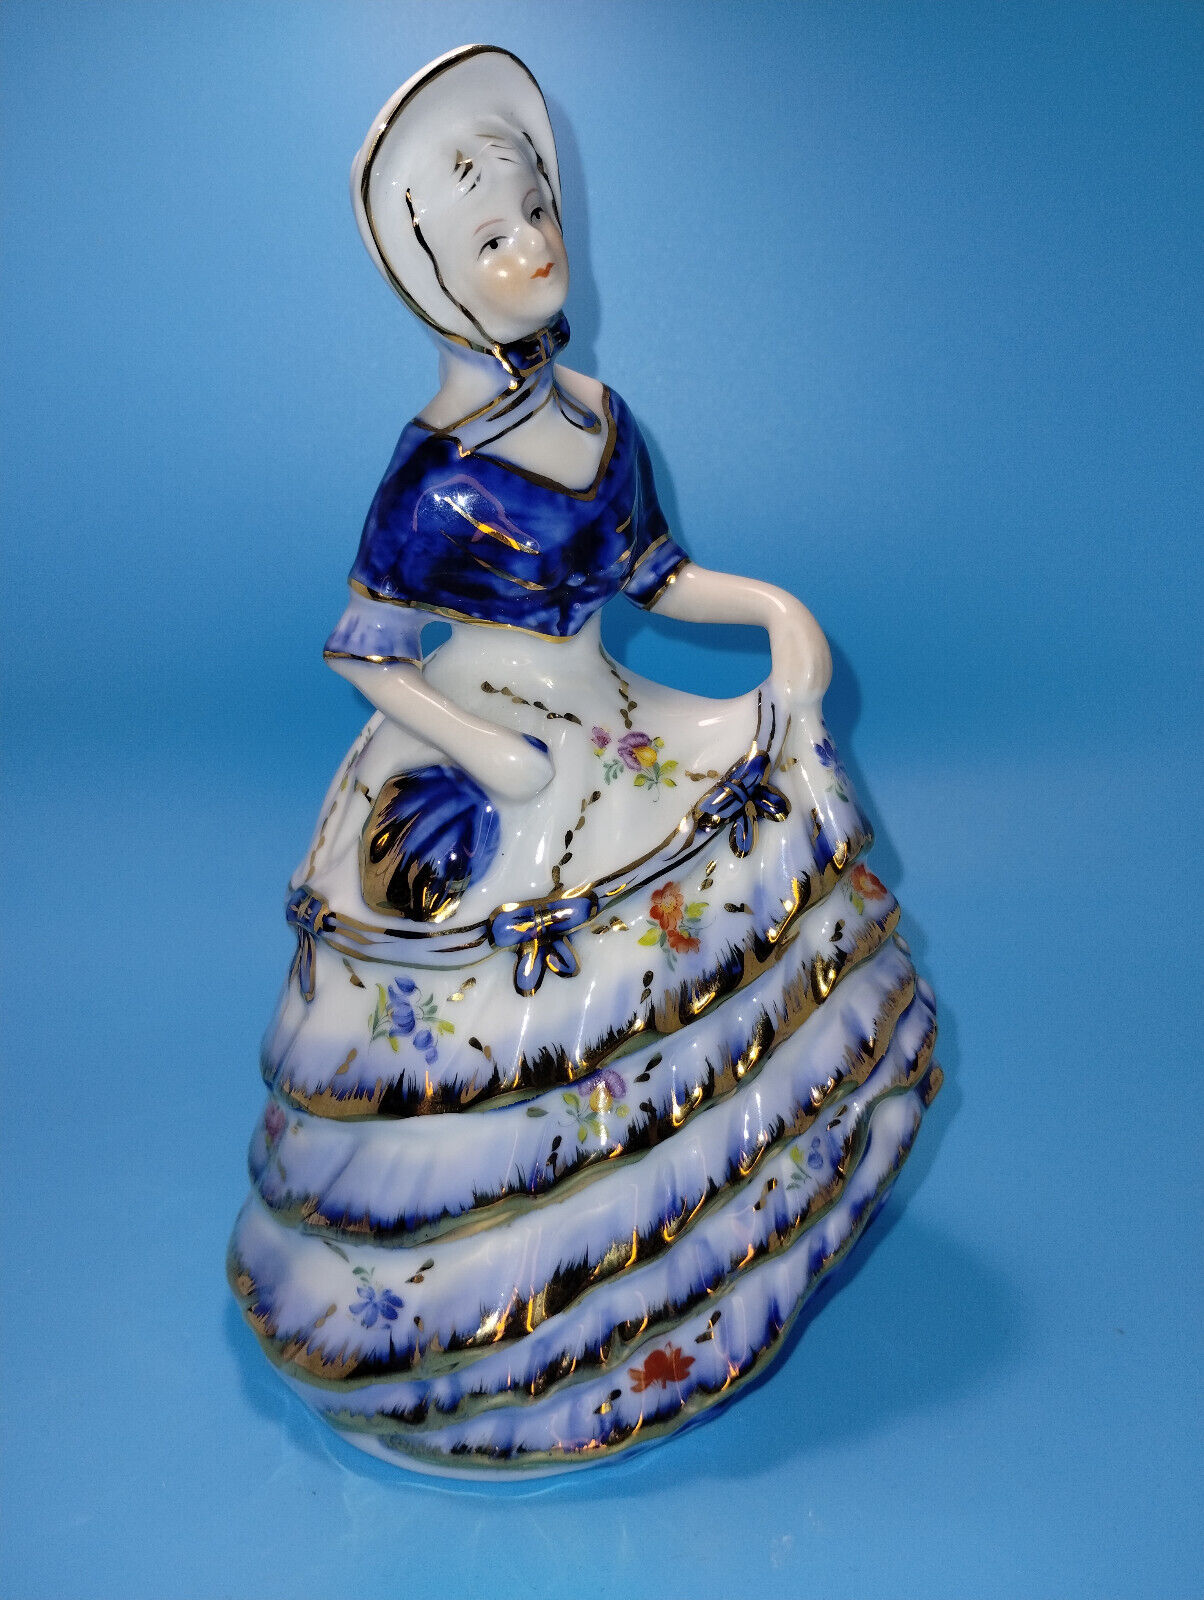 VTG KPM Porcelain Victorian Lady in Bonnet Figurine early 20th century